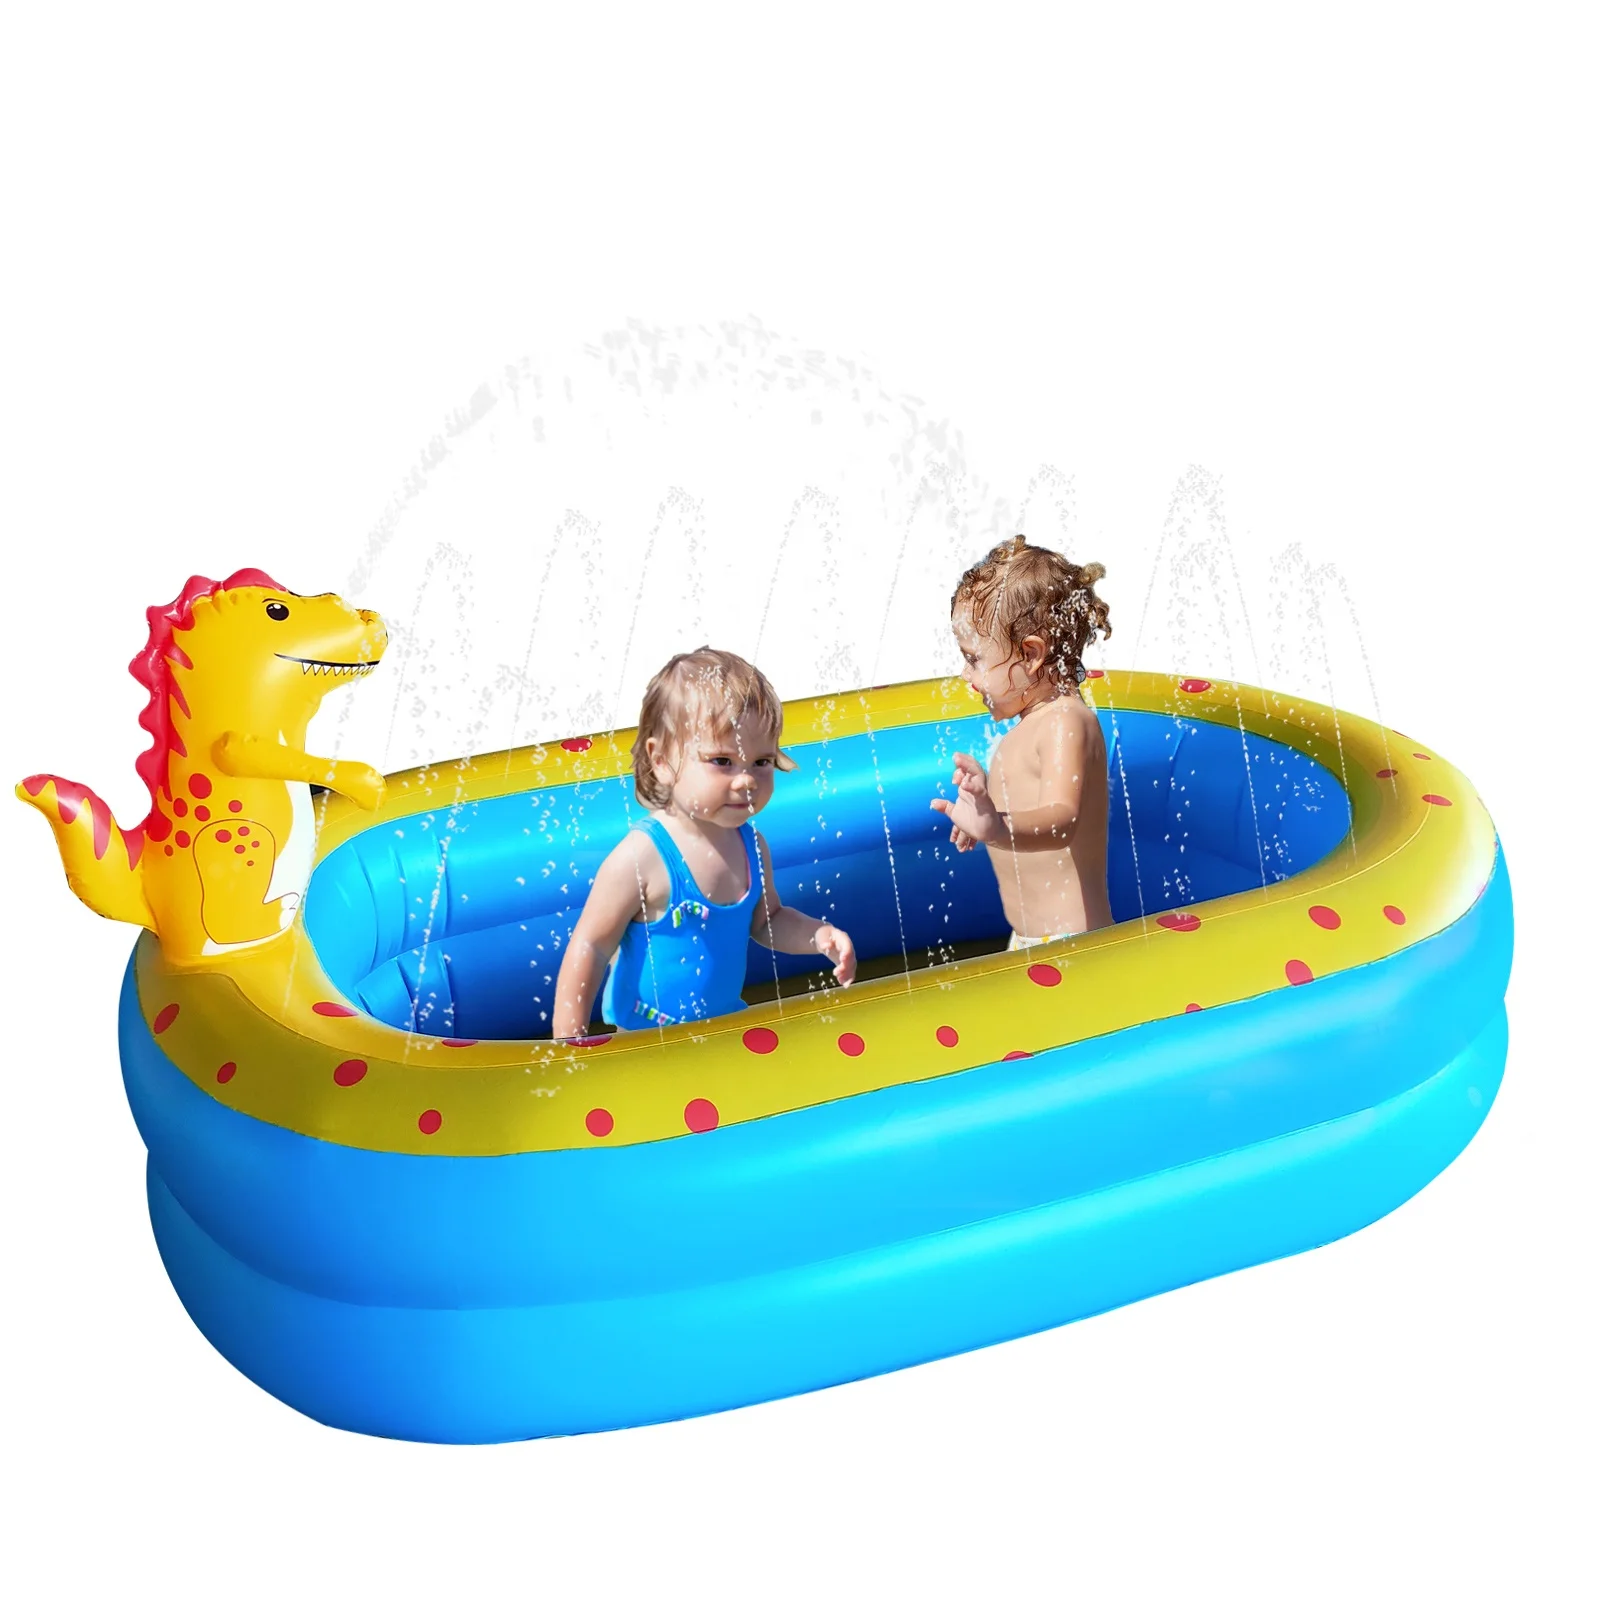 

3 in 1 Inflatable Dinosaur Sprinkler Pool Water Park for Kids Toddlers Kiddie Wading Swimming Outdoor Splash Pool, Blue,yellow